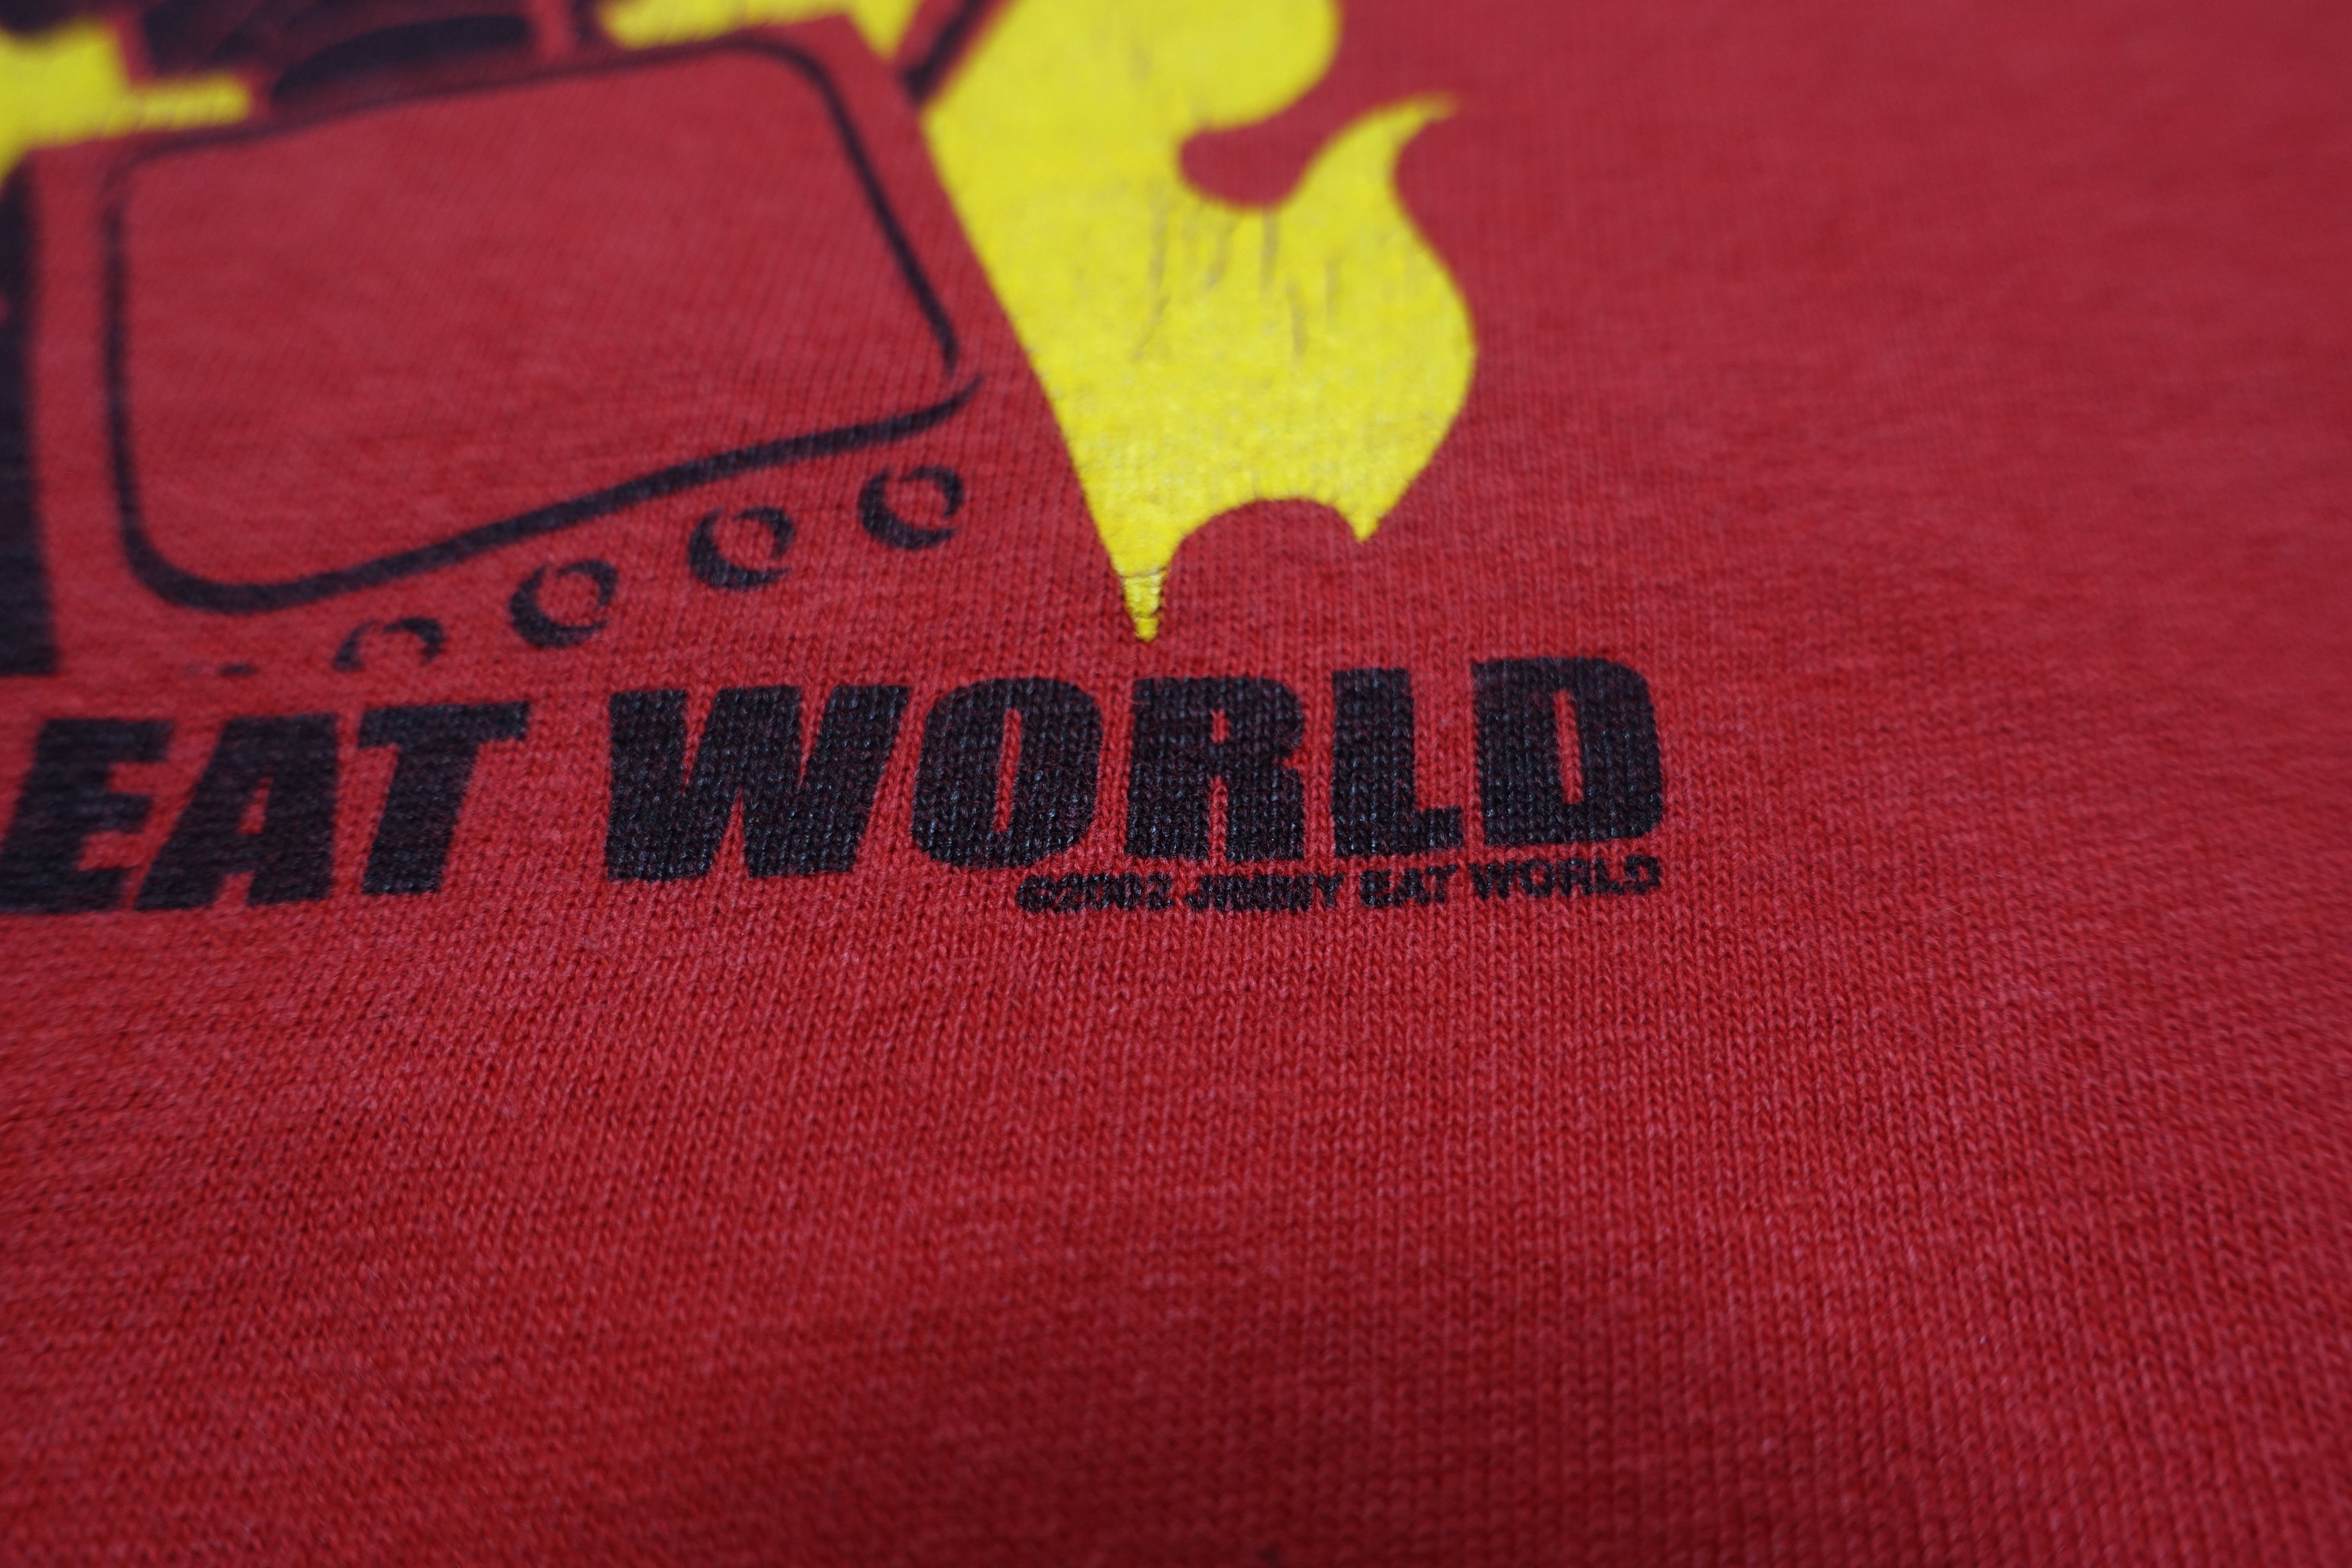 Jimmy Eat World - Flaming Robot USA 2002 Tour Shirt Size Large